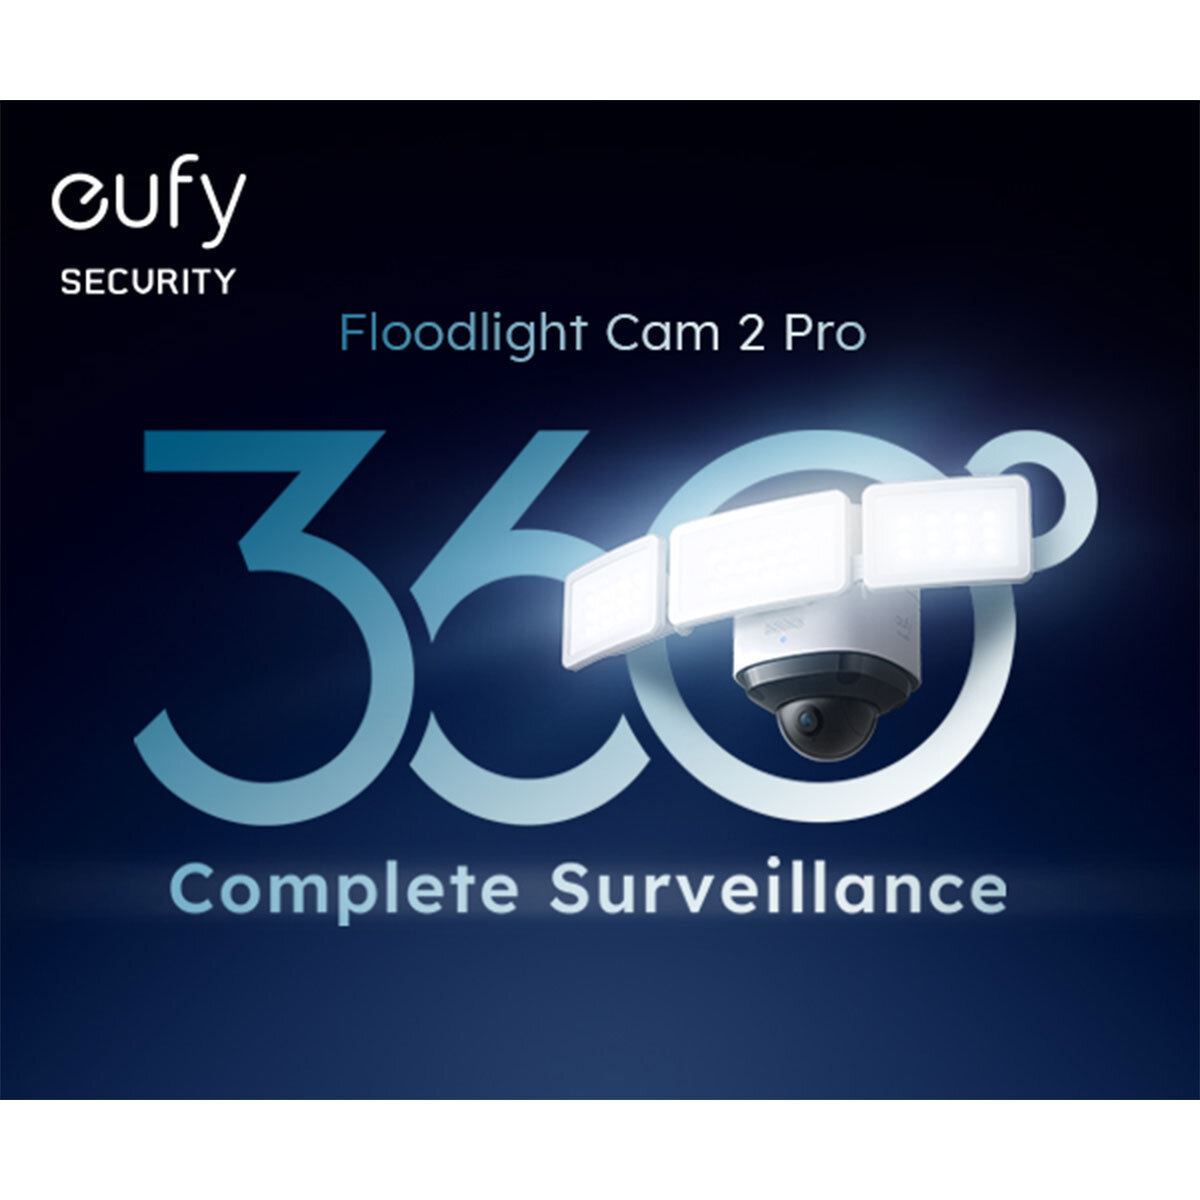 Eufy Floodlight Camera Infographic